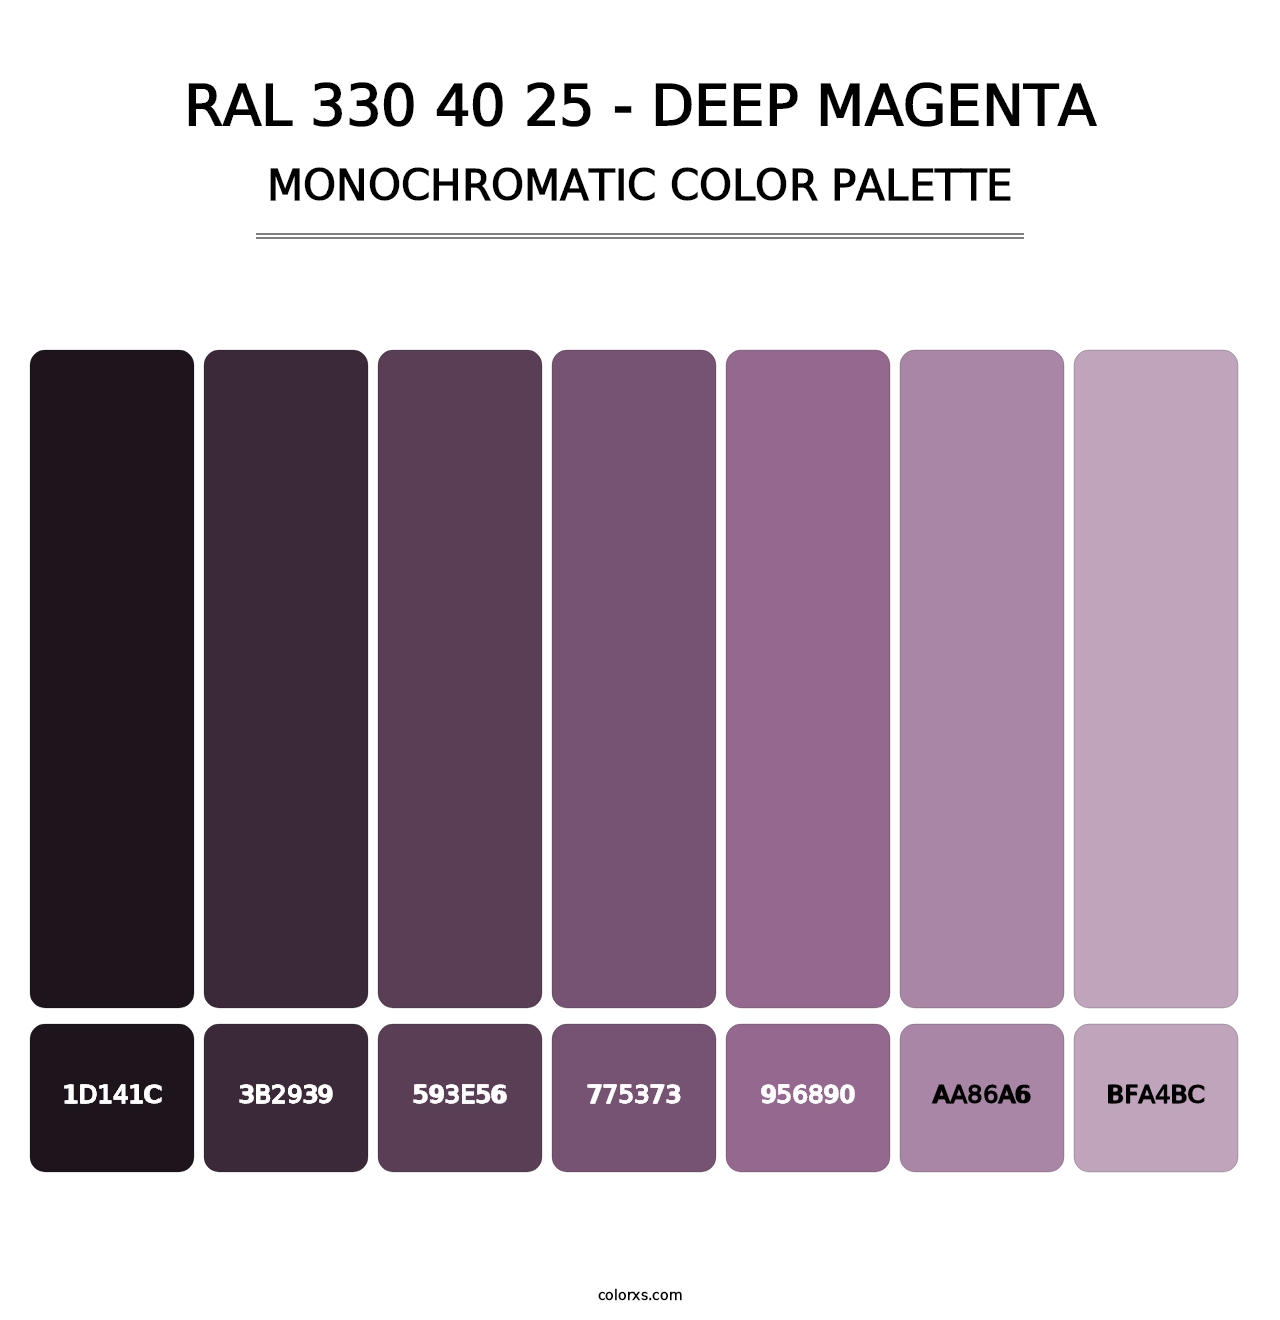 RAL 330 40 25 - Deep Magenta - Monochromatic Color Palette